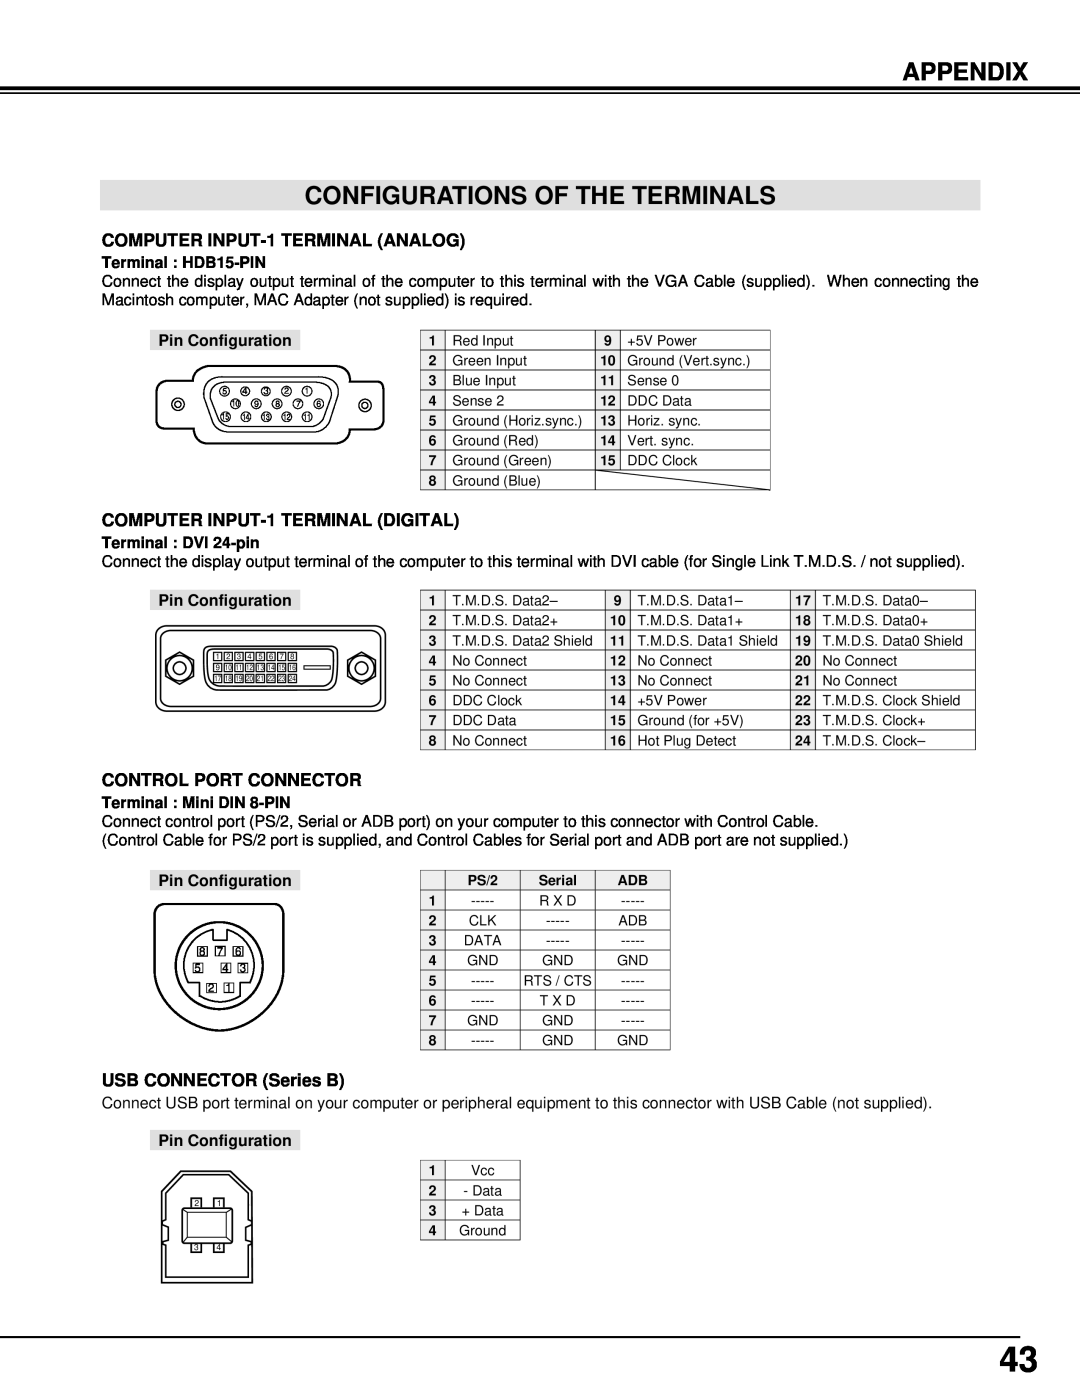 BOXLIGHT cp-12t manual Appendix Configurations Of The Terminals, Terminal HDB15-PIN, Pin Configuration, Terminal DVI 24-pin 